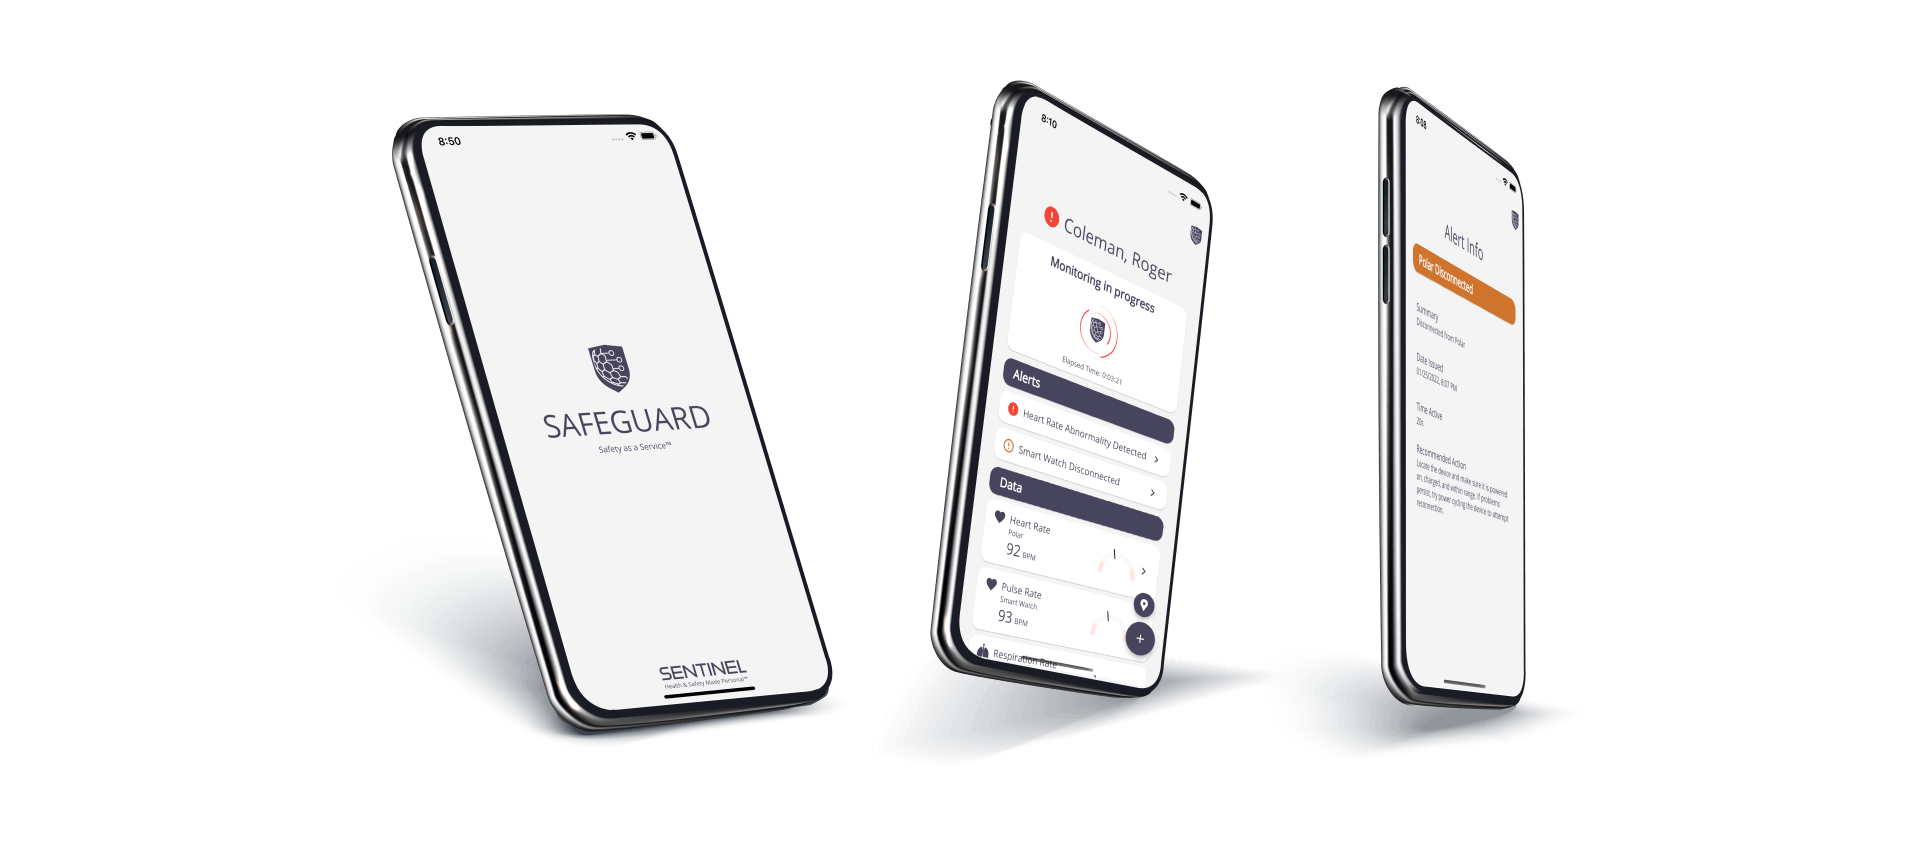 3 smart phone showing an app